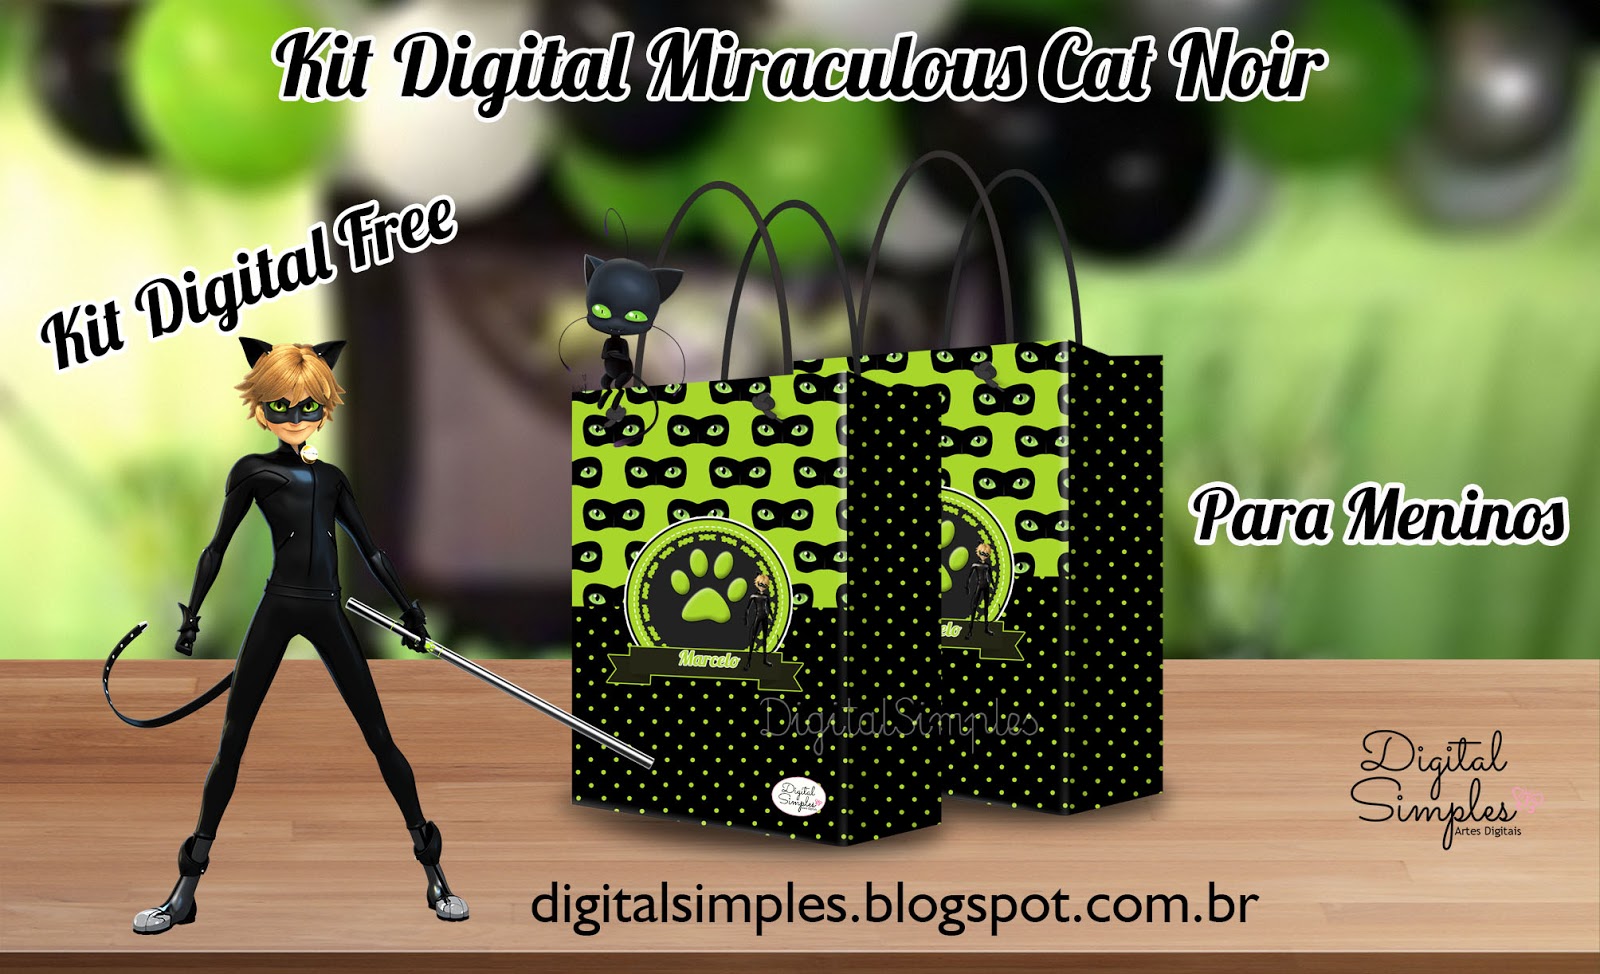 Miraculous: As Aventuras de Ladybug & Cat Noir